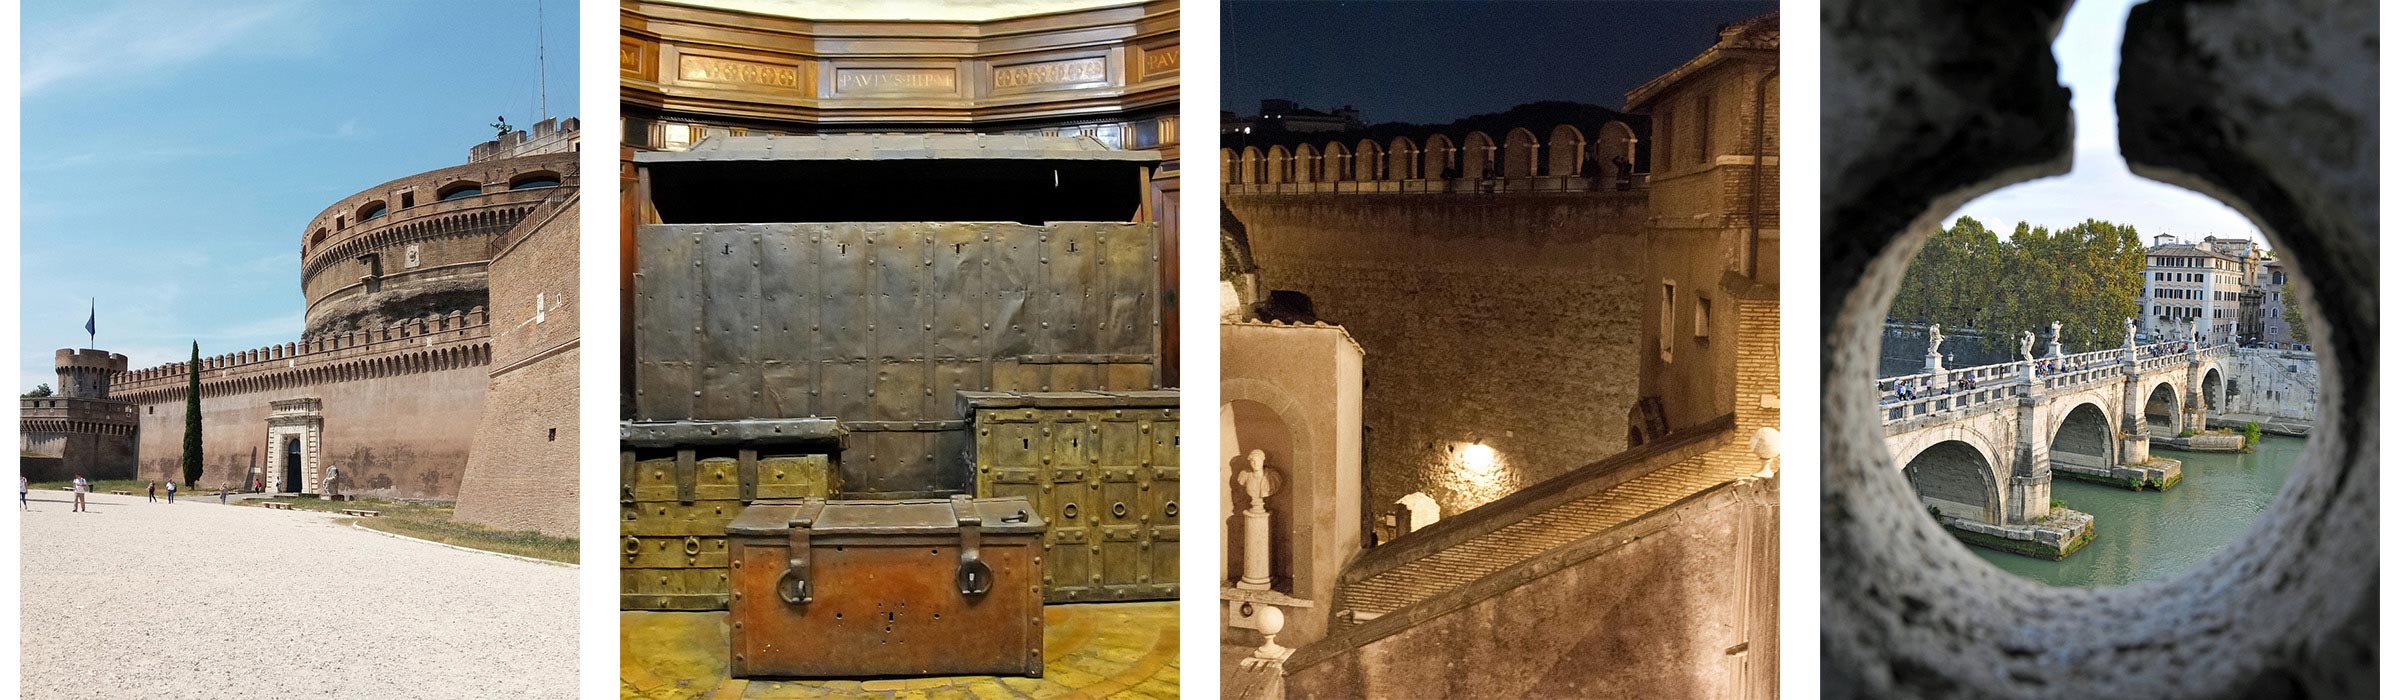 cortile Castel Sant'Angelo | stanze del tesoro | merlature | terrazze